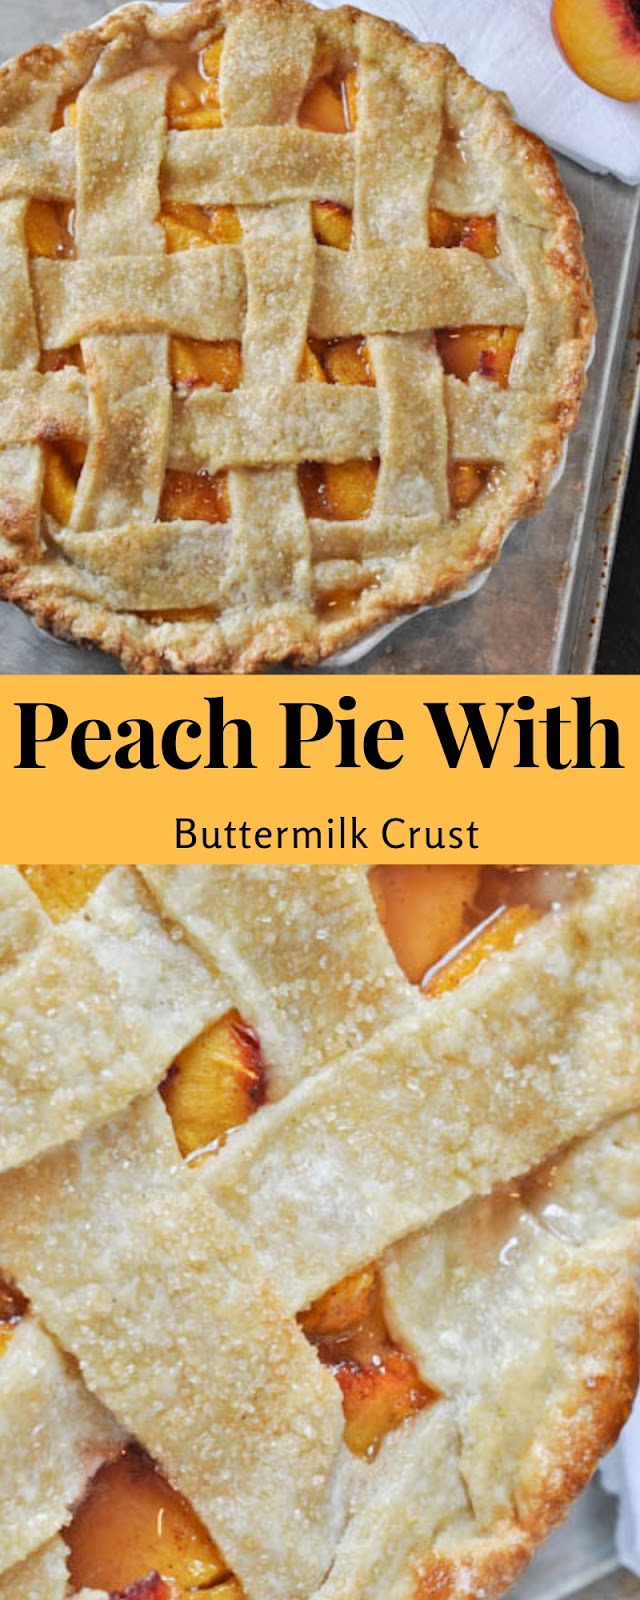 Peach Pie With Buttermilk Crust